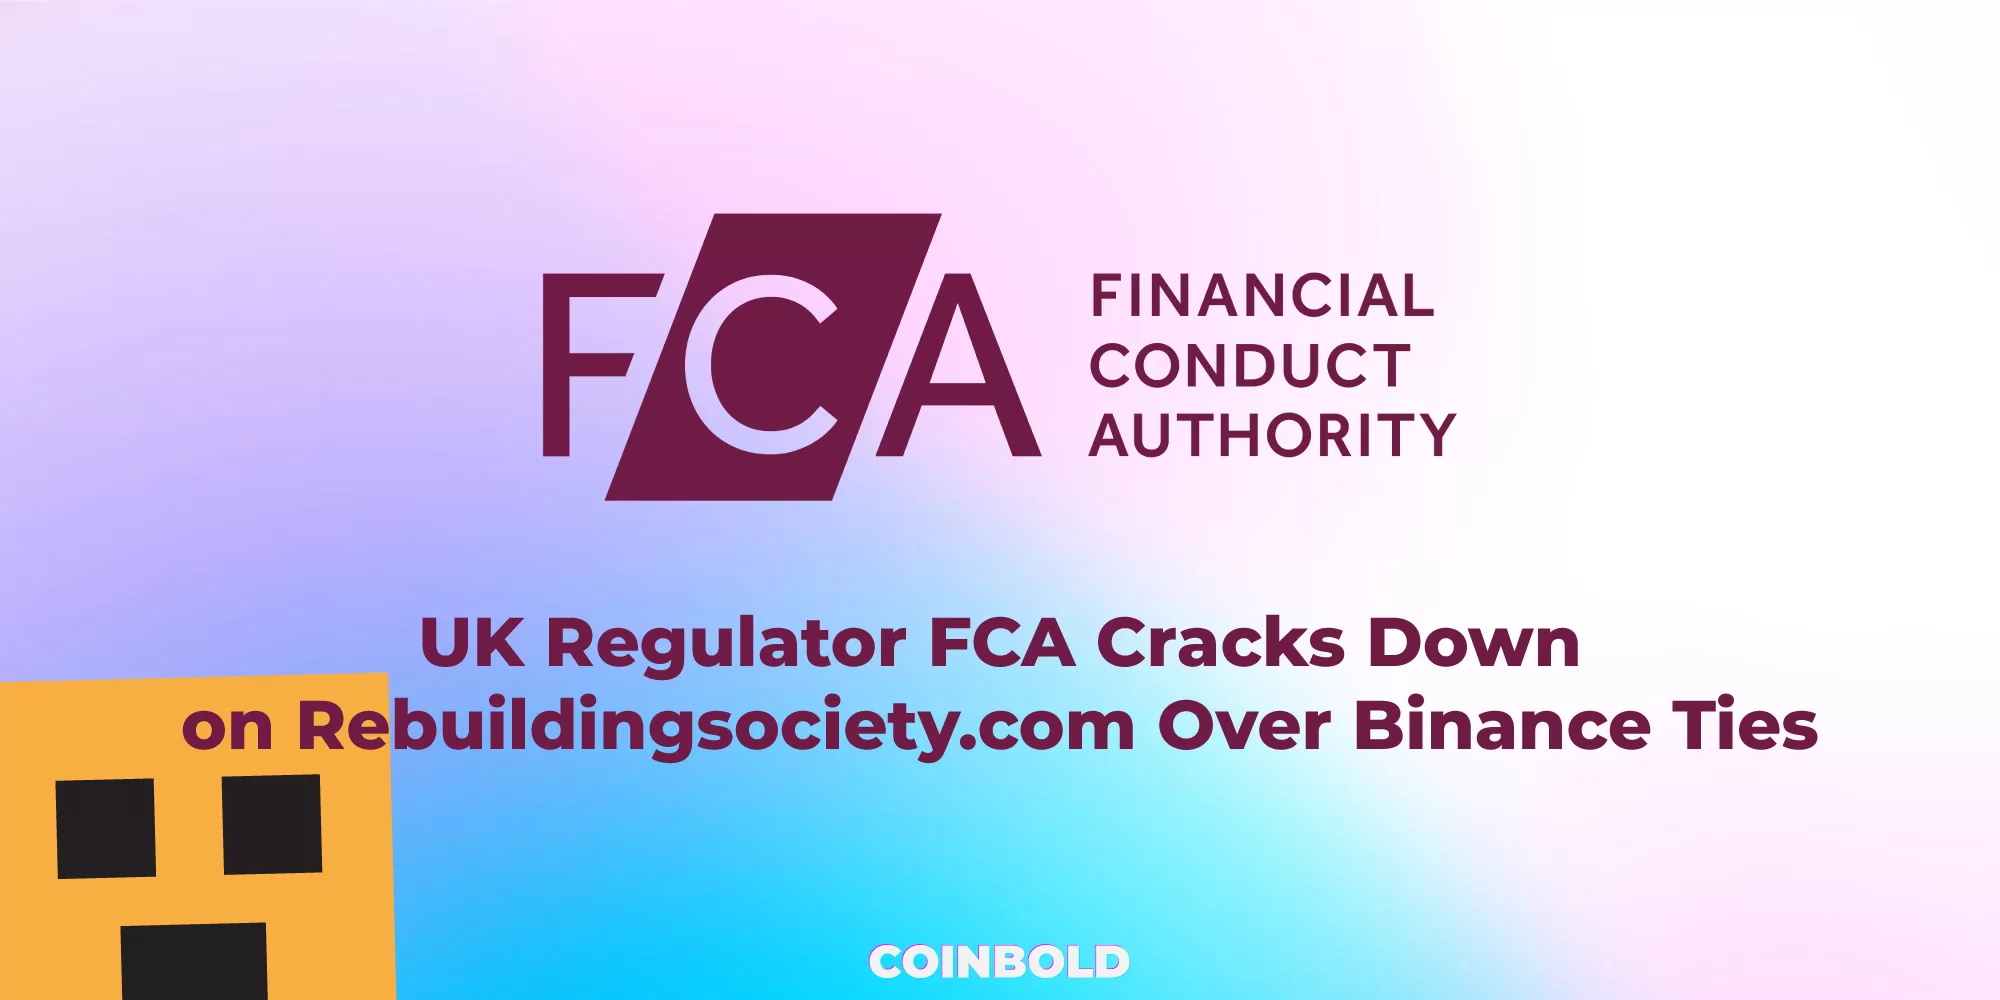 UK Regulator FCA Cracks Down on Rebuildingsociety.com Over Binance Ties